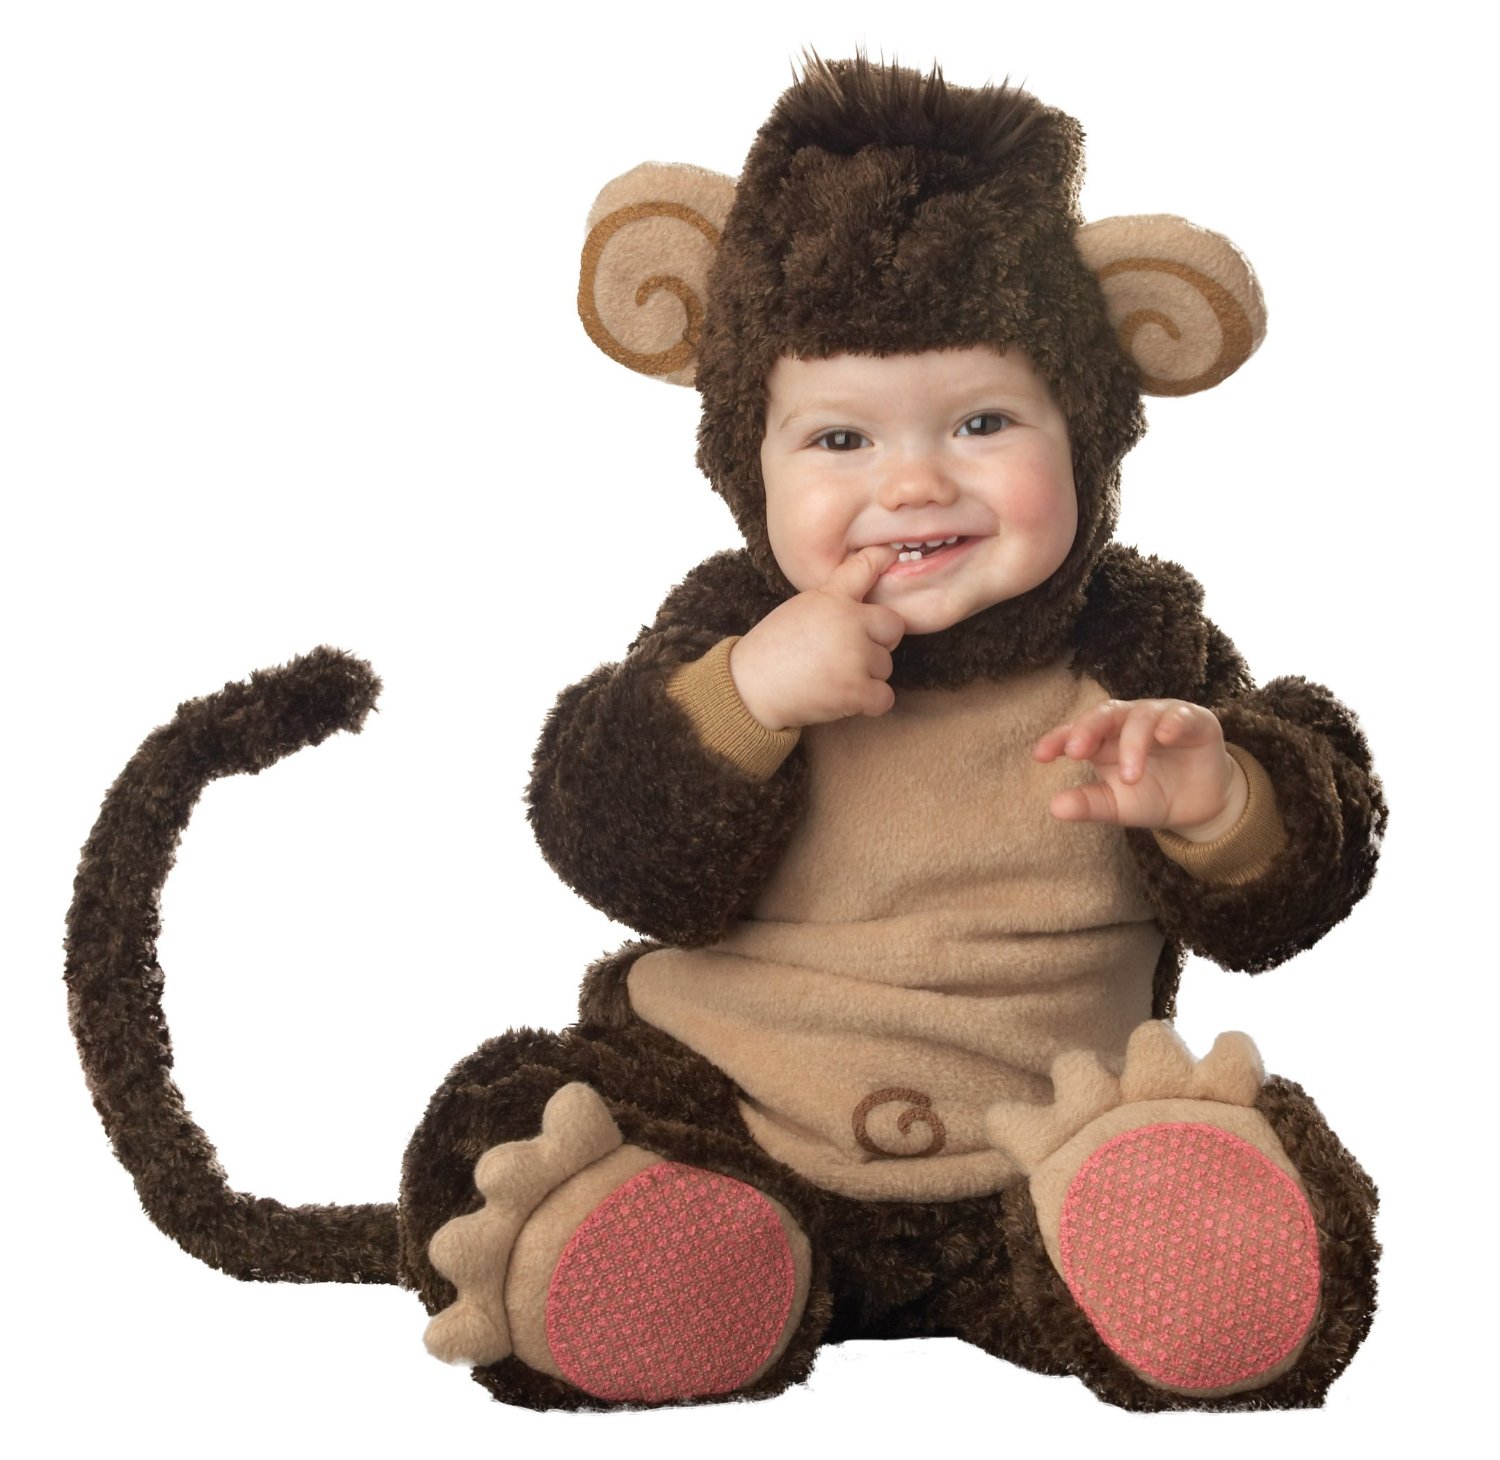 The Best Baby Halloween Costume of 2012 Monkey